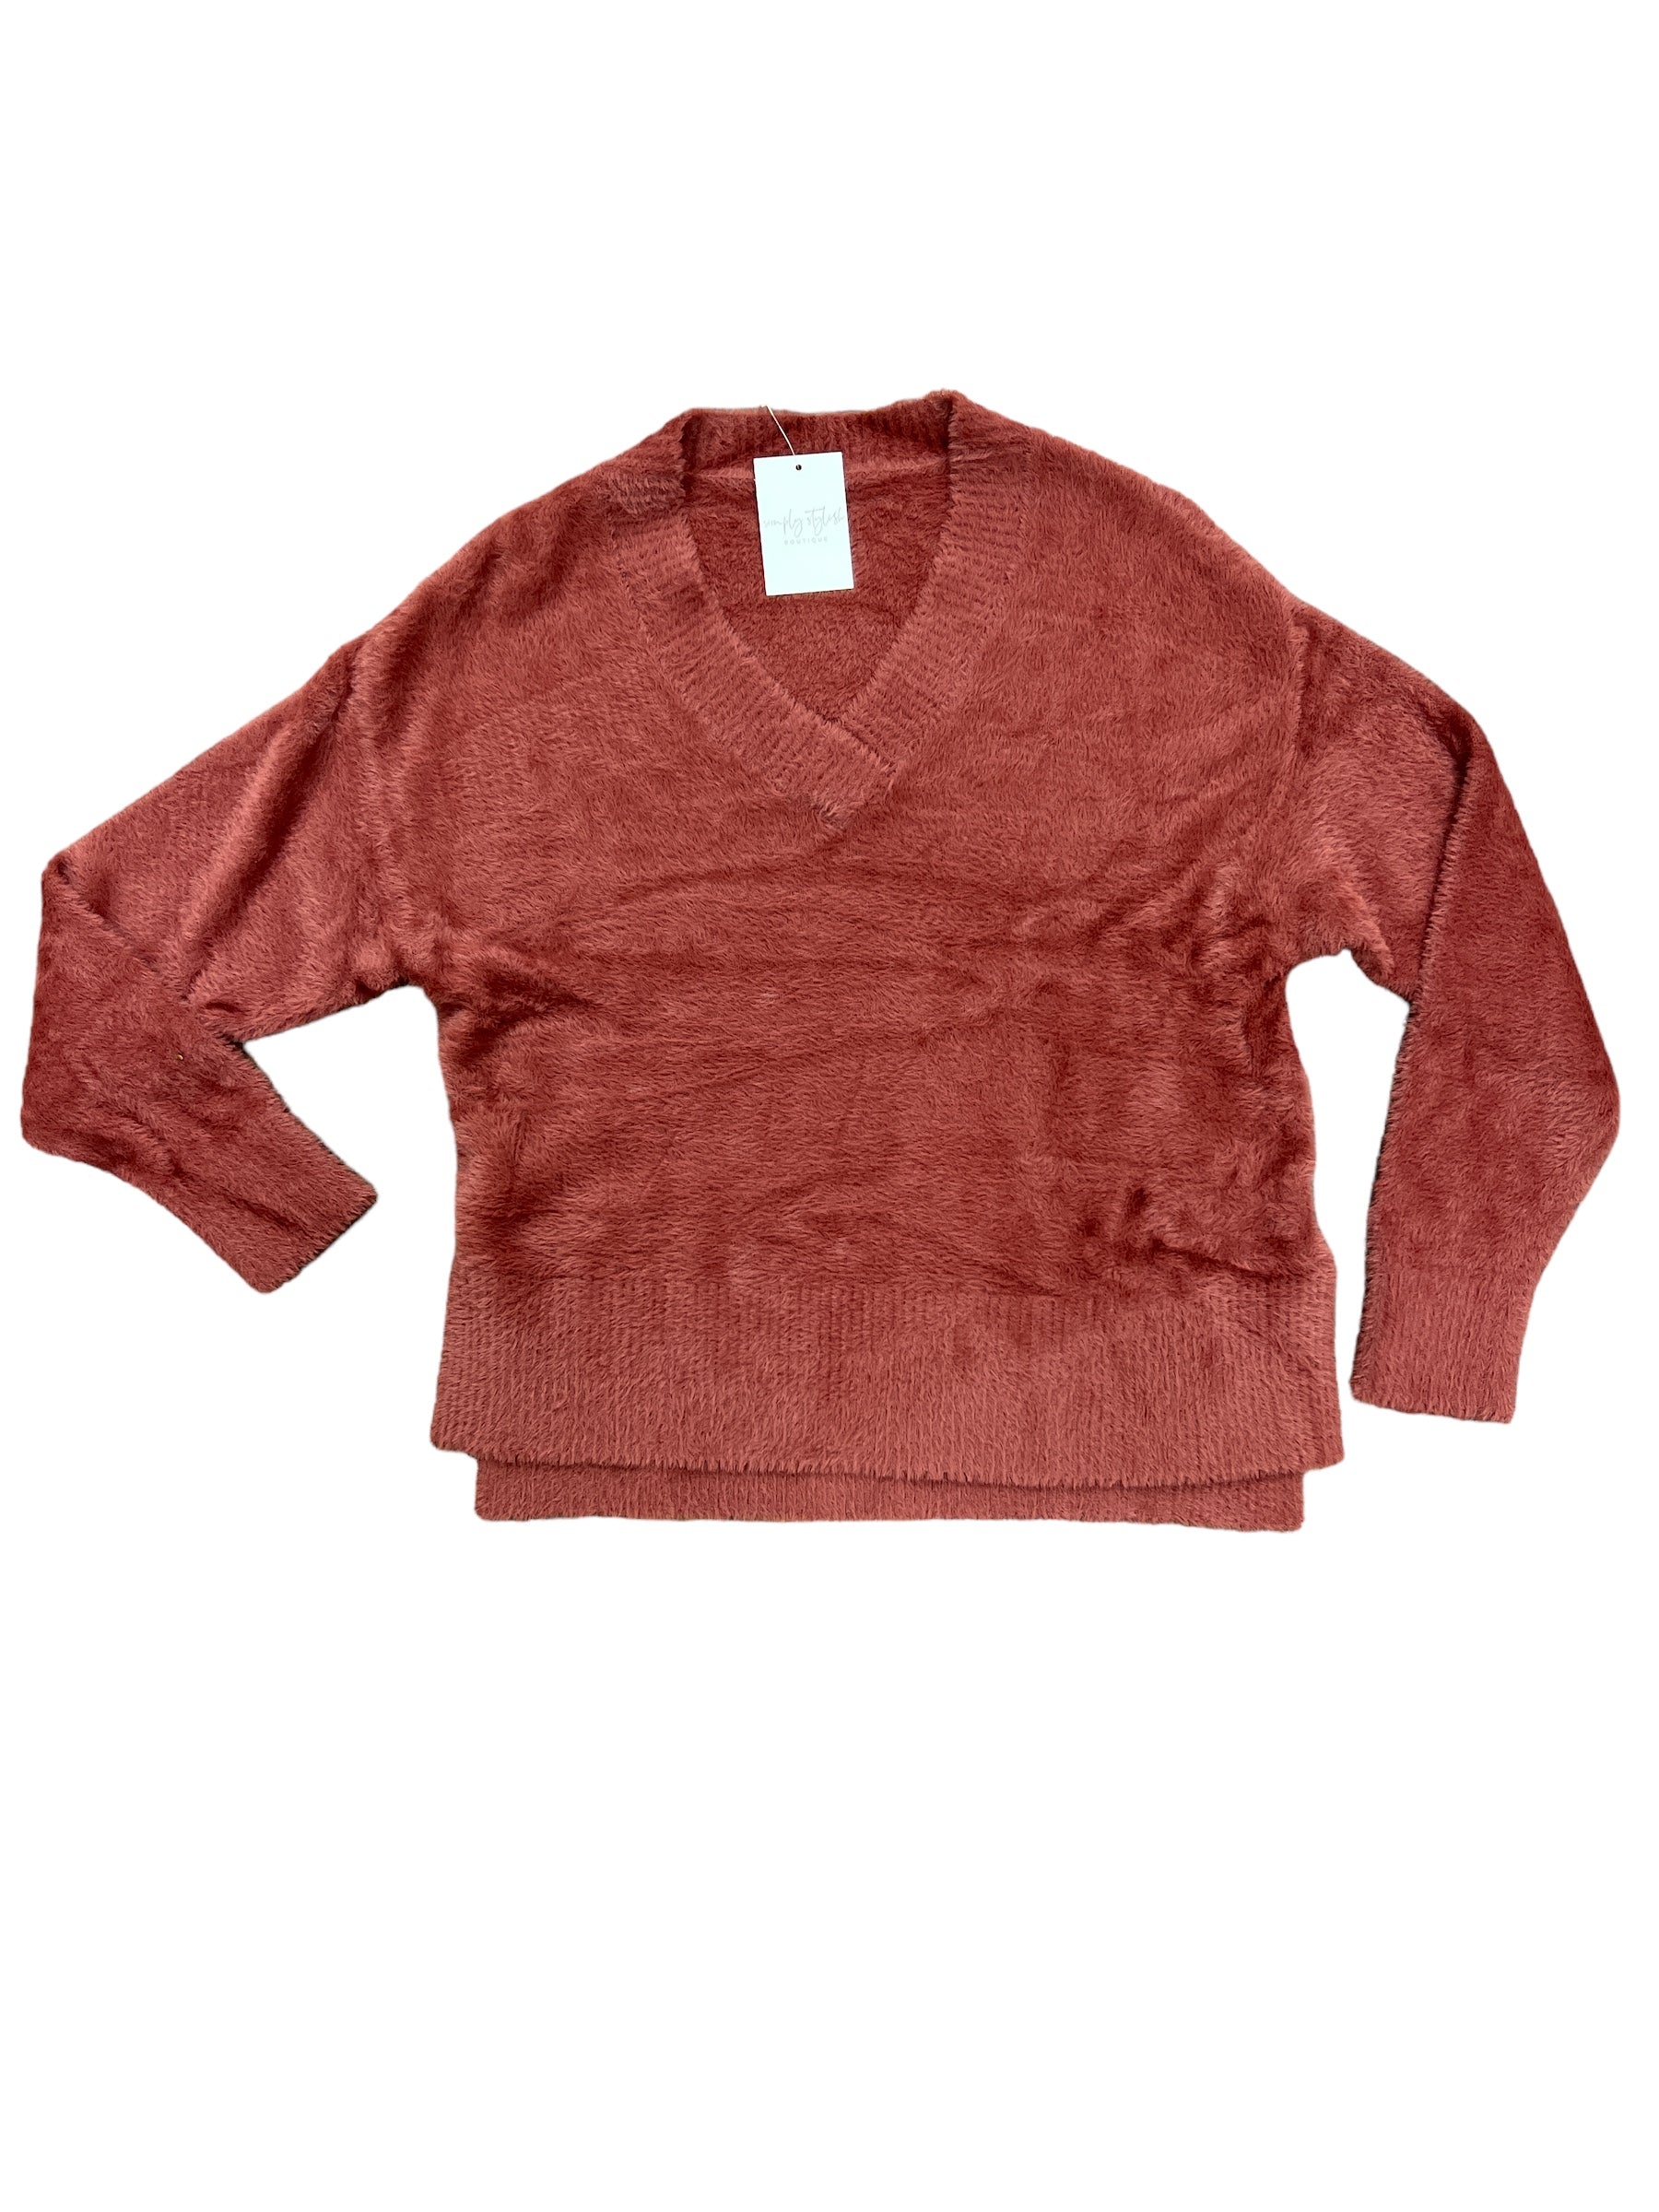 Margarita Sweater-140 Sweaters, Cardigans & Sweatshirts-Simply Stylish Boutique-Simply Stylish Boutique | Women’s & Kid’s Fashion | Paducah, KY